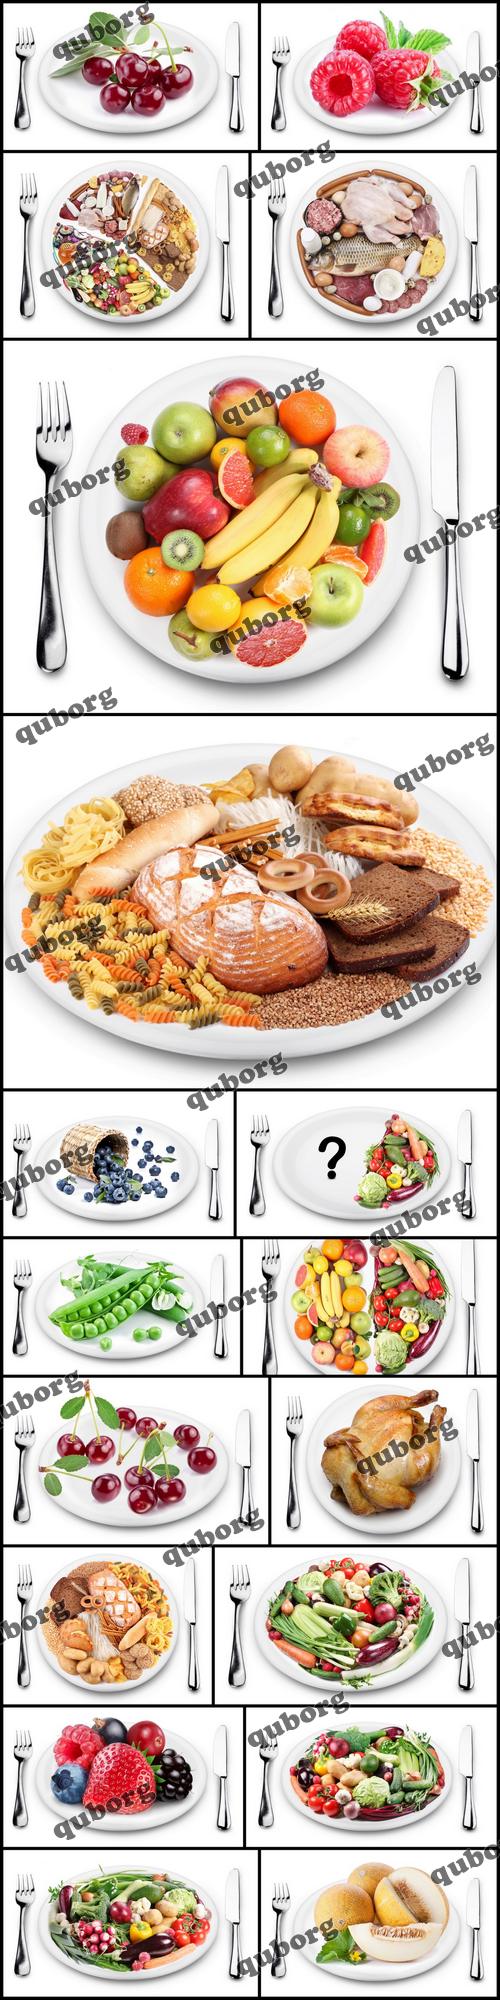 Stock Photos - Food on a Plate